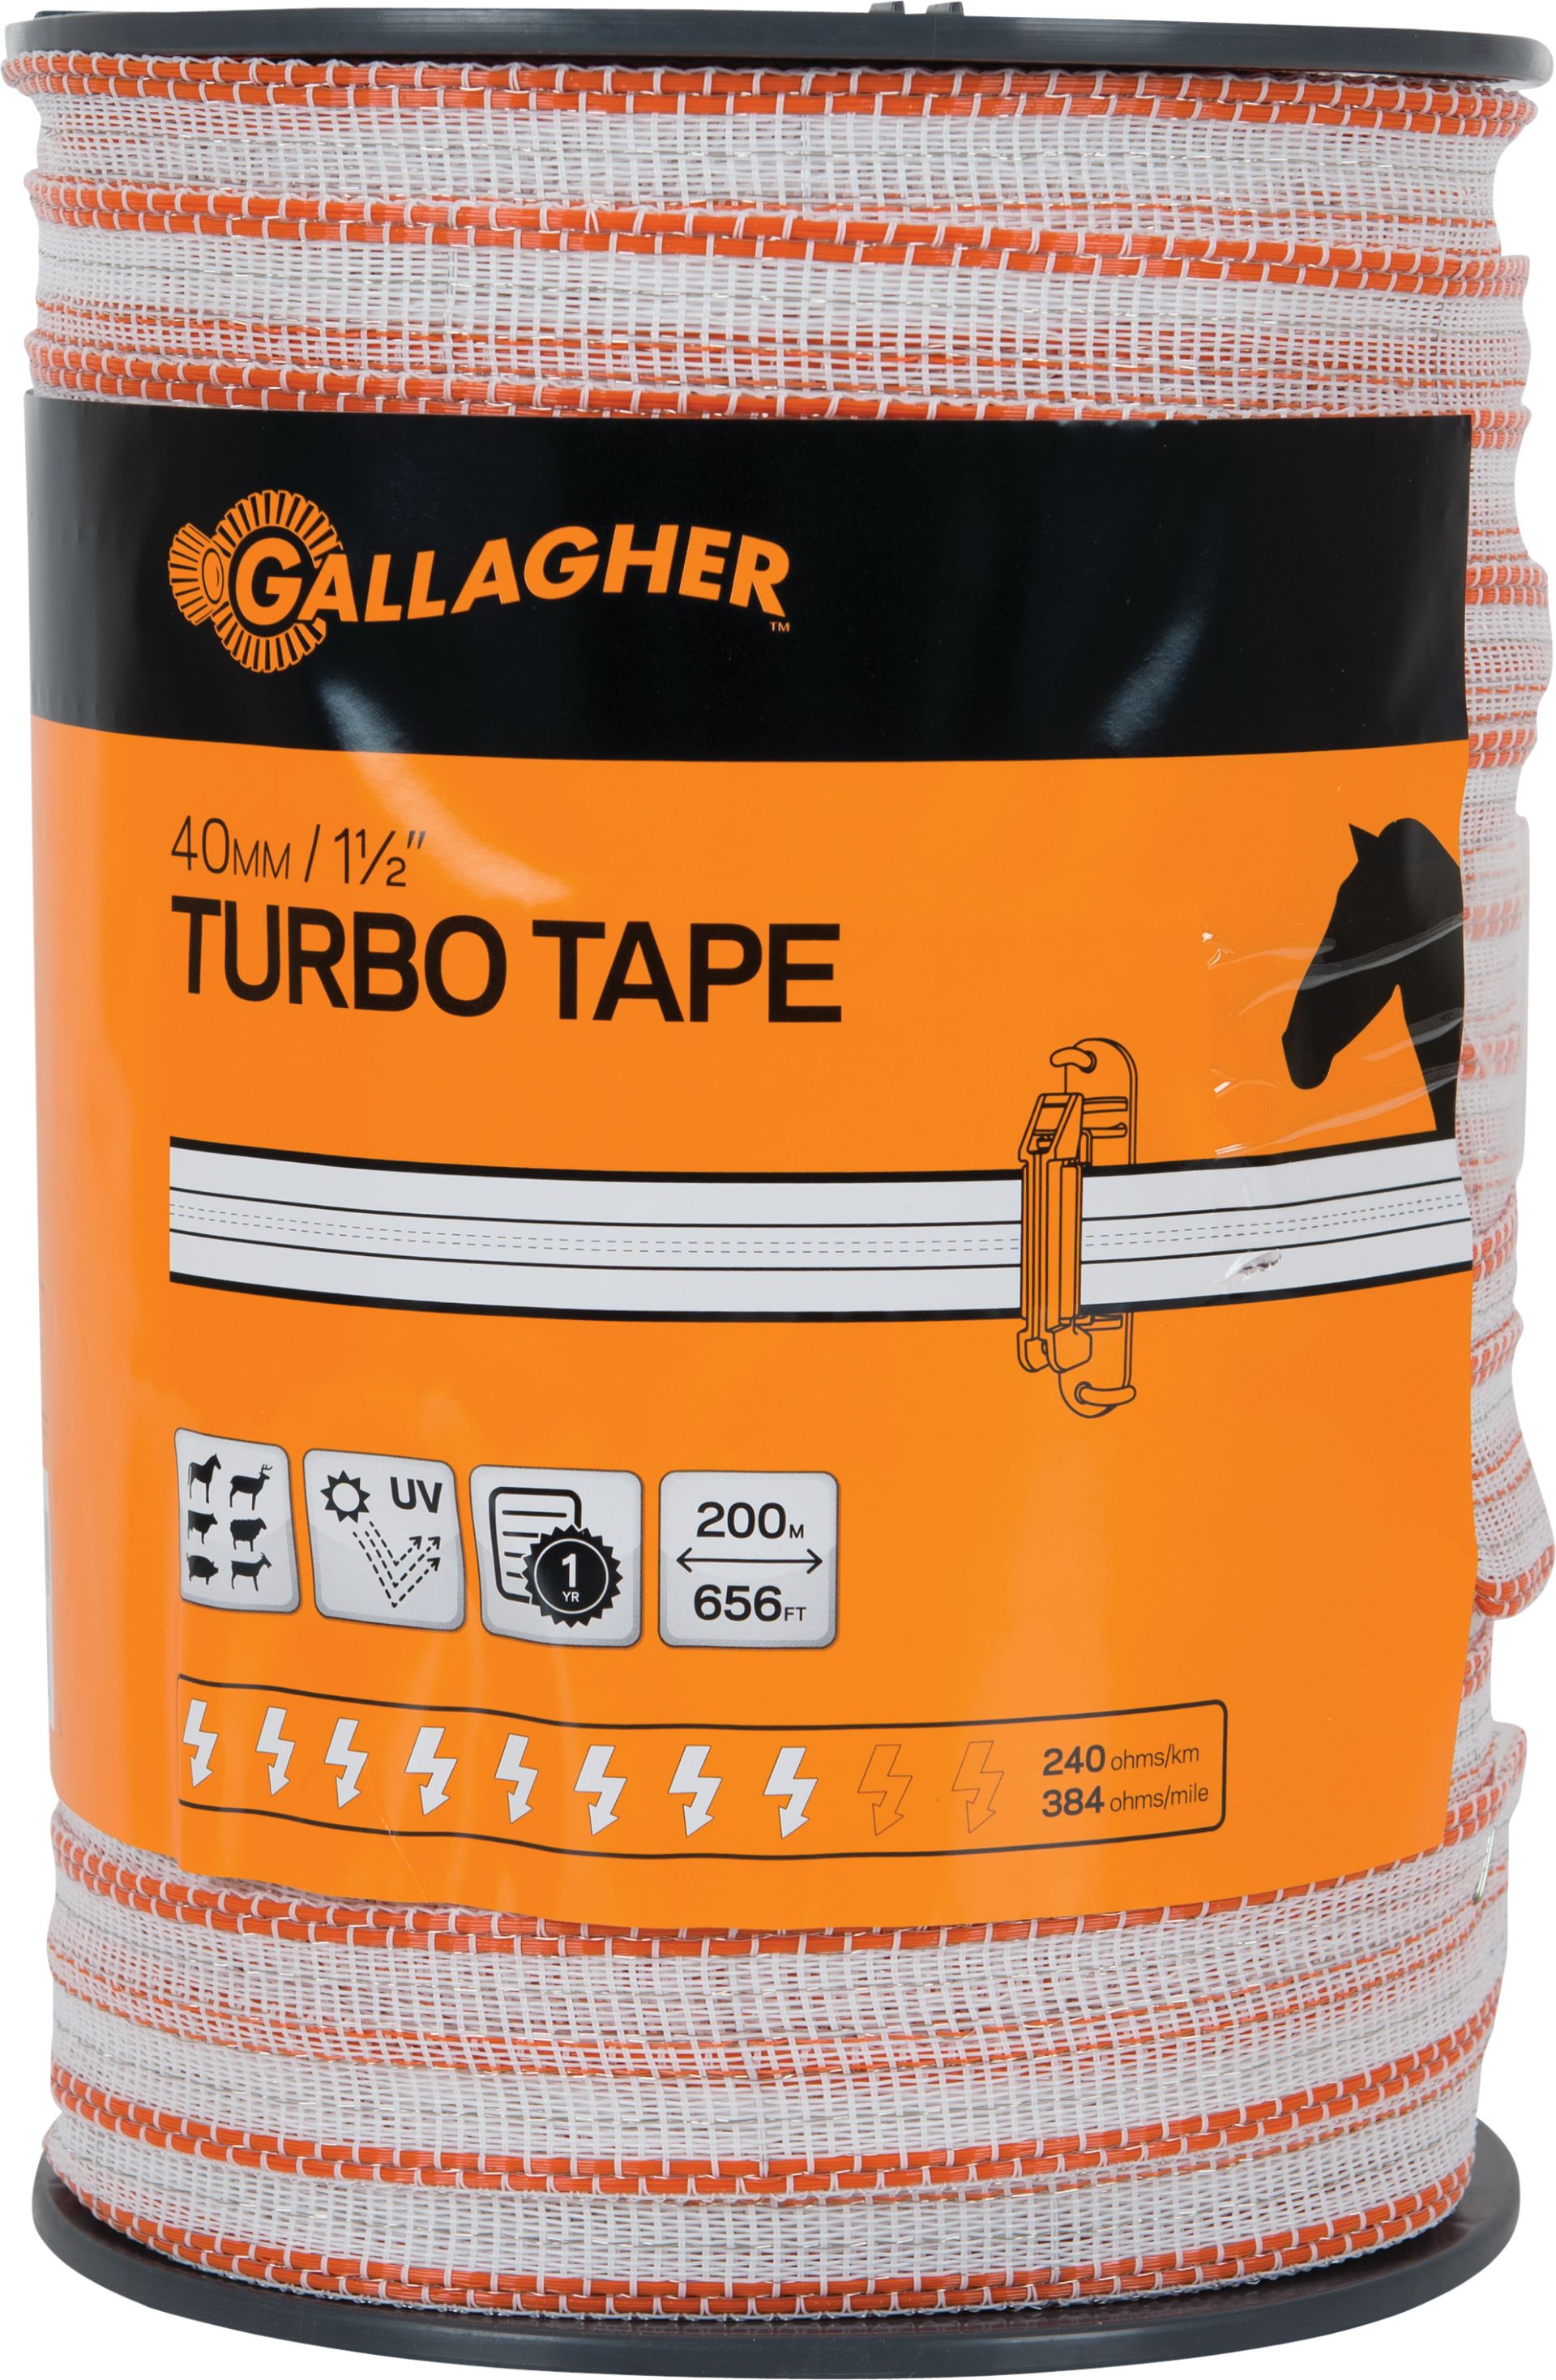 40mm Turbo Tape